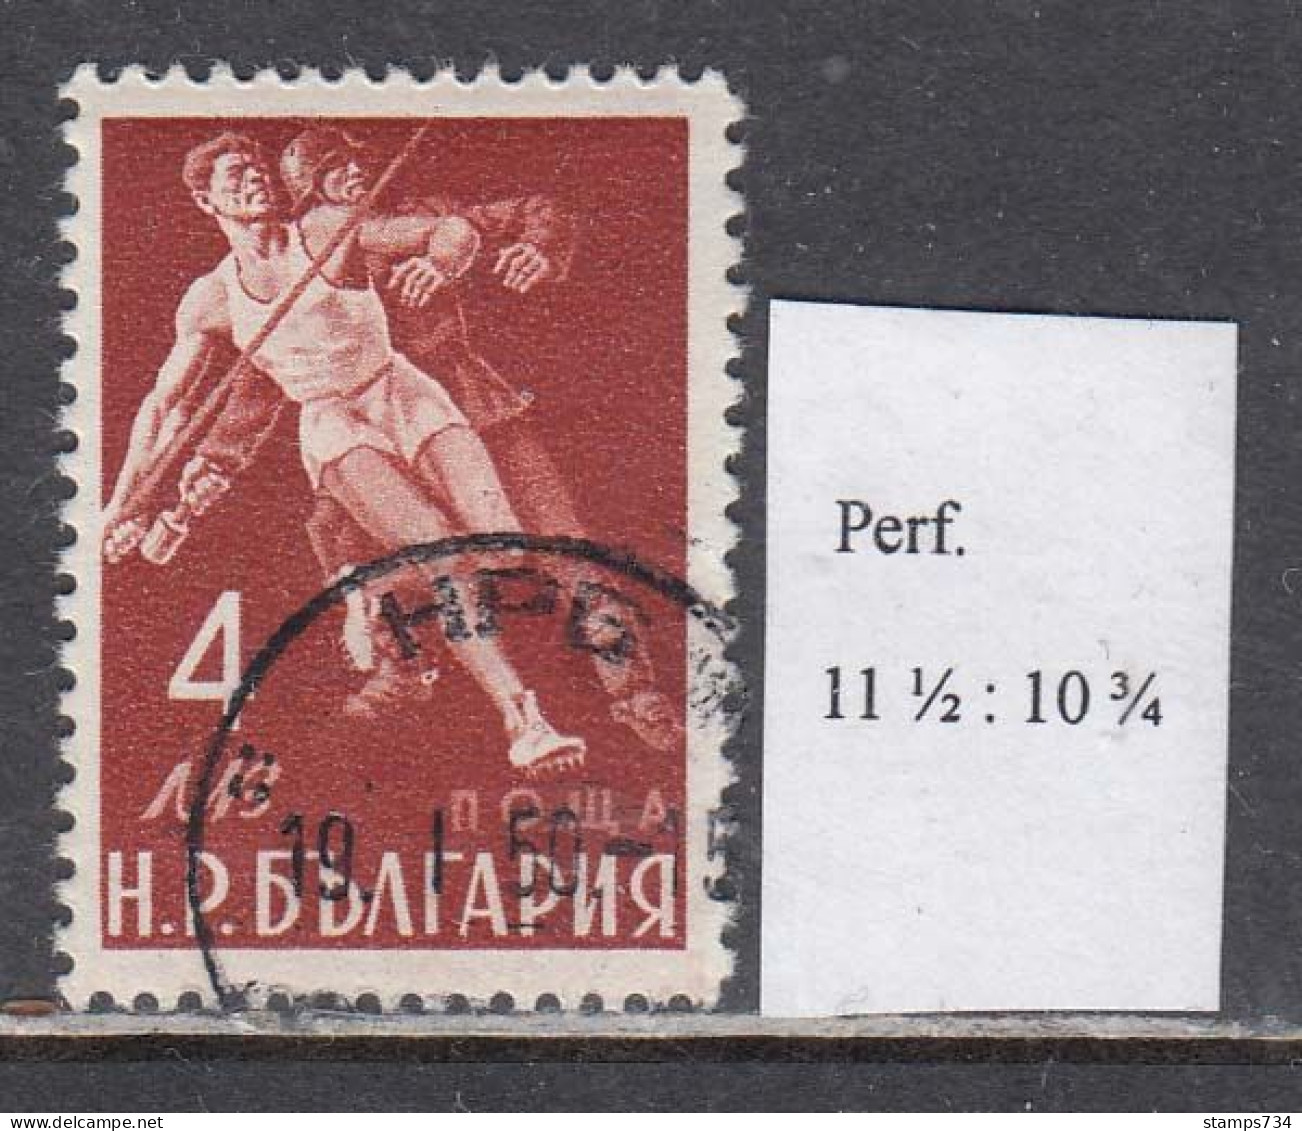 Bulgaria 1949 - Sport 4 Lev, Mi-Nr. 704, Rare Preforation 11 1/2: 10 3/4, Used - Oblitérés